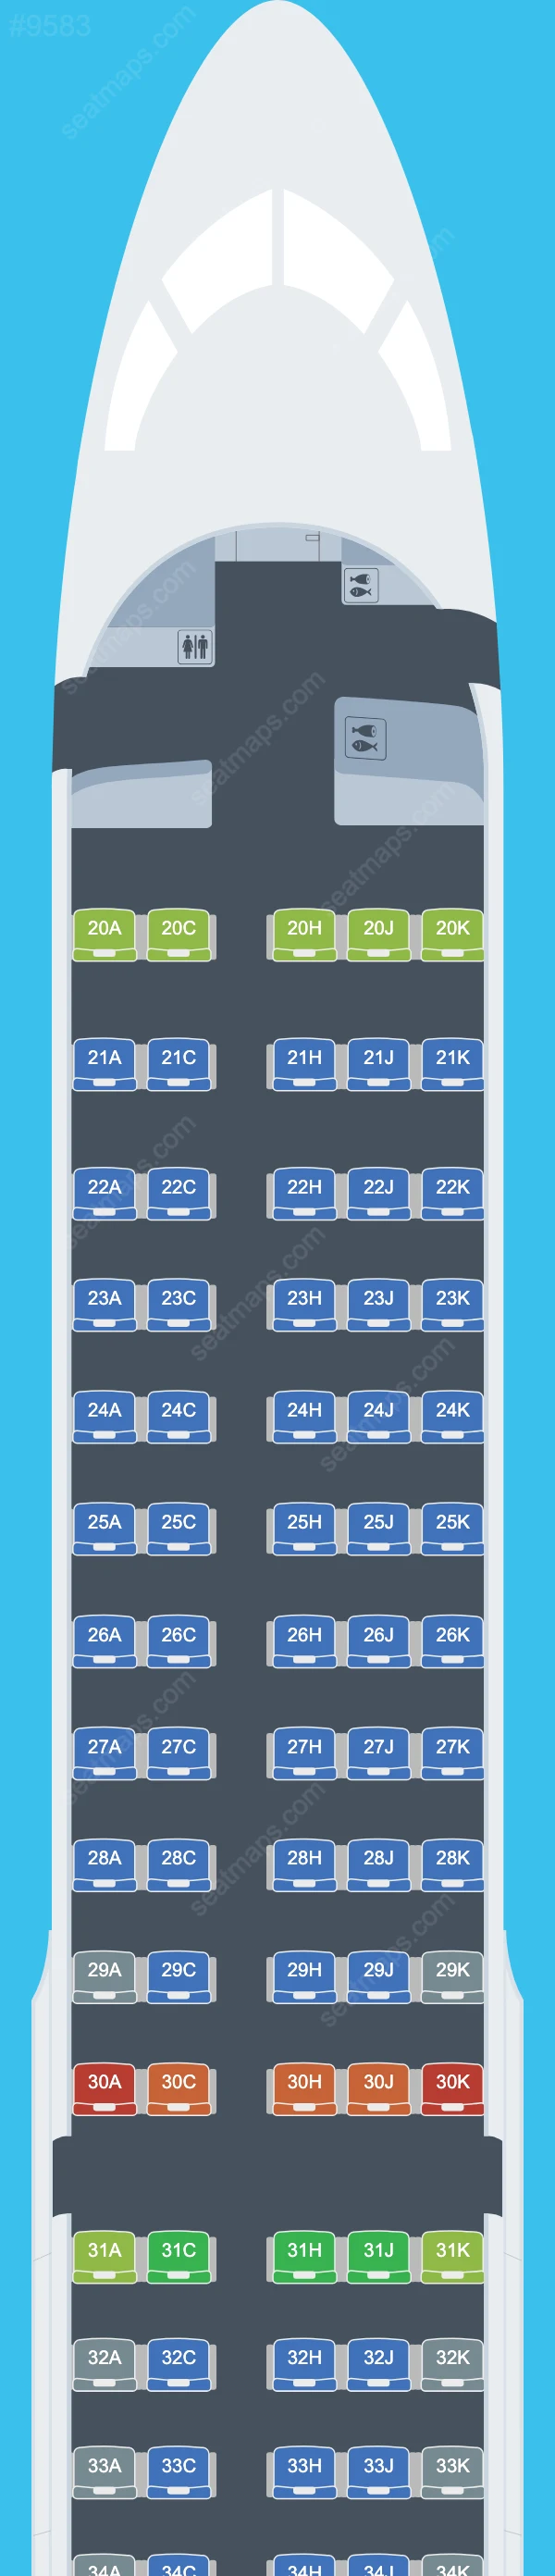 Egyptair Airbus A220 Seat Maps A220-300